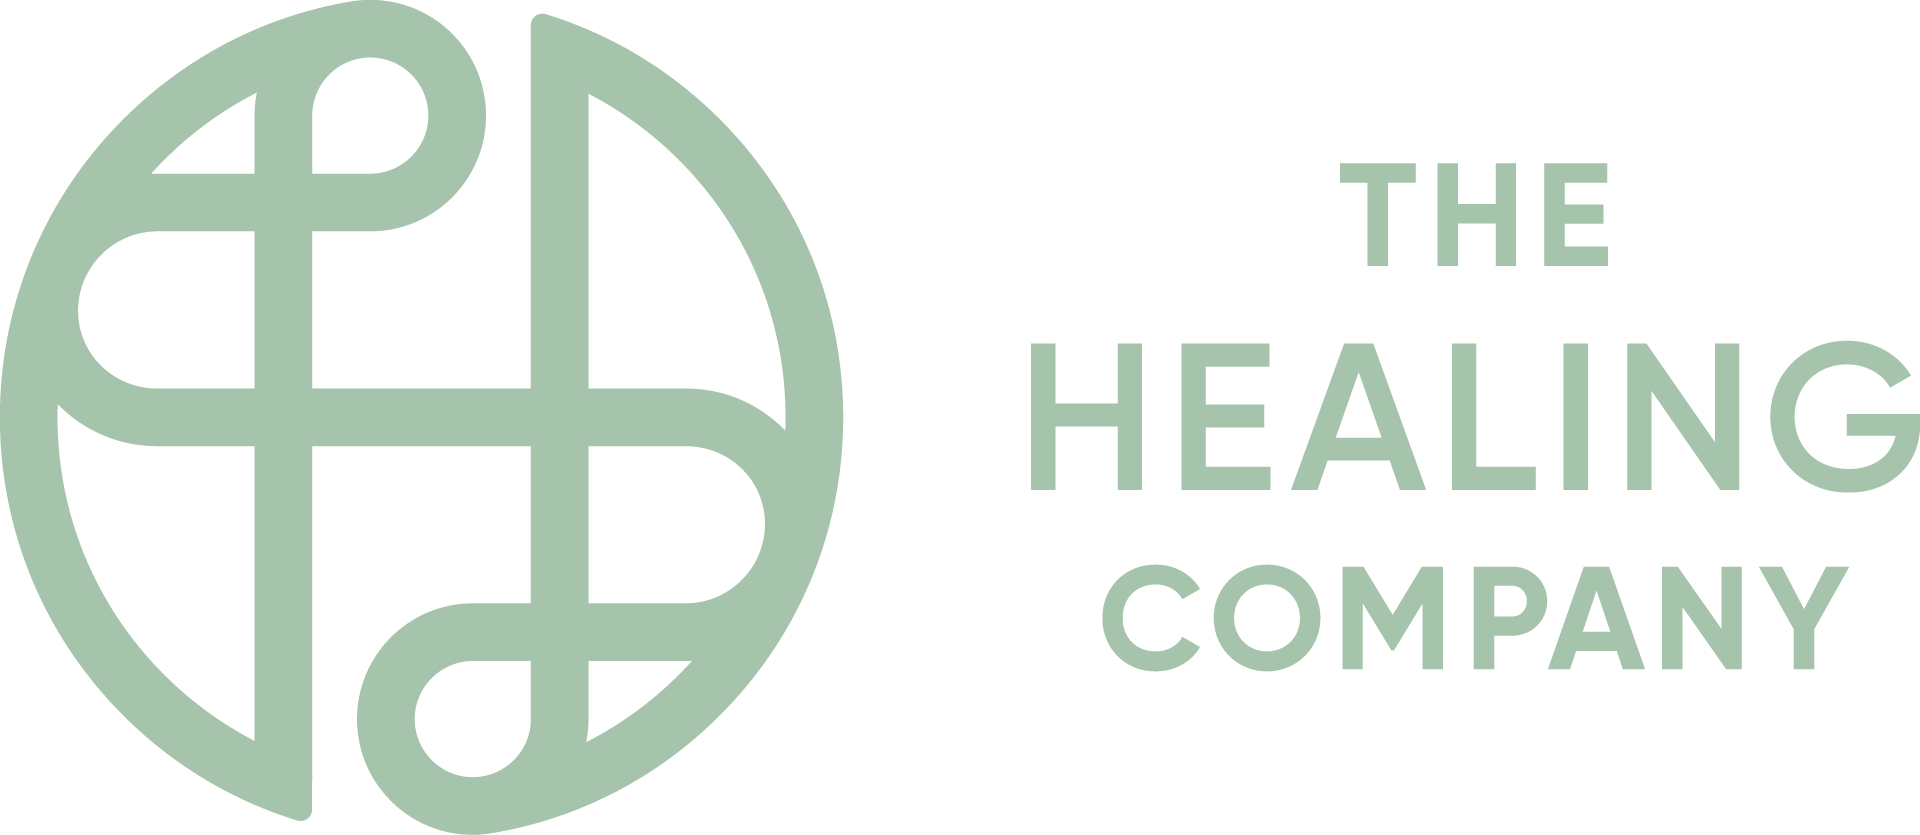 Dr Deepak Chopra Partners With The Healing Co HLCO OTCQB - Shares Soar